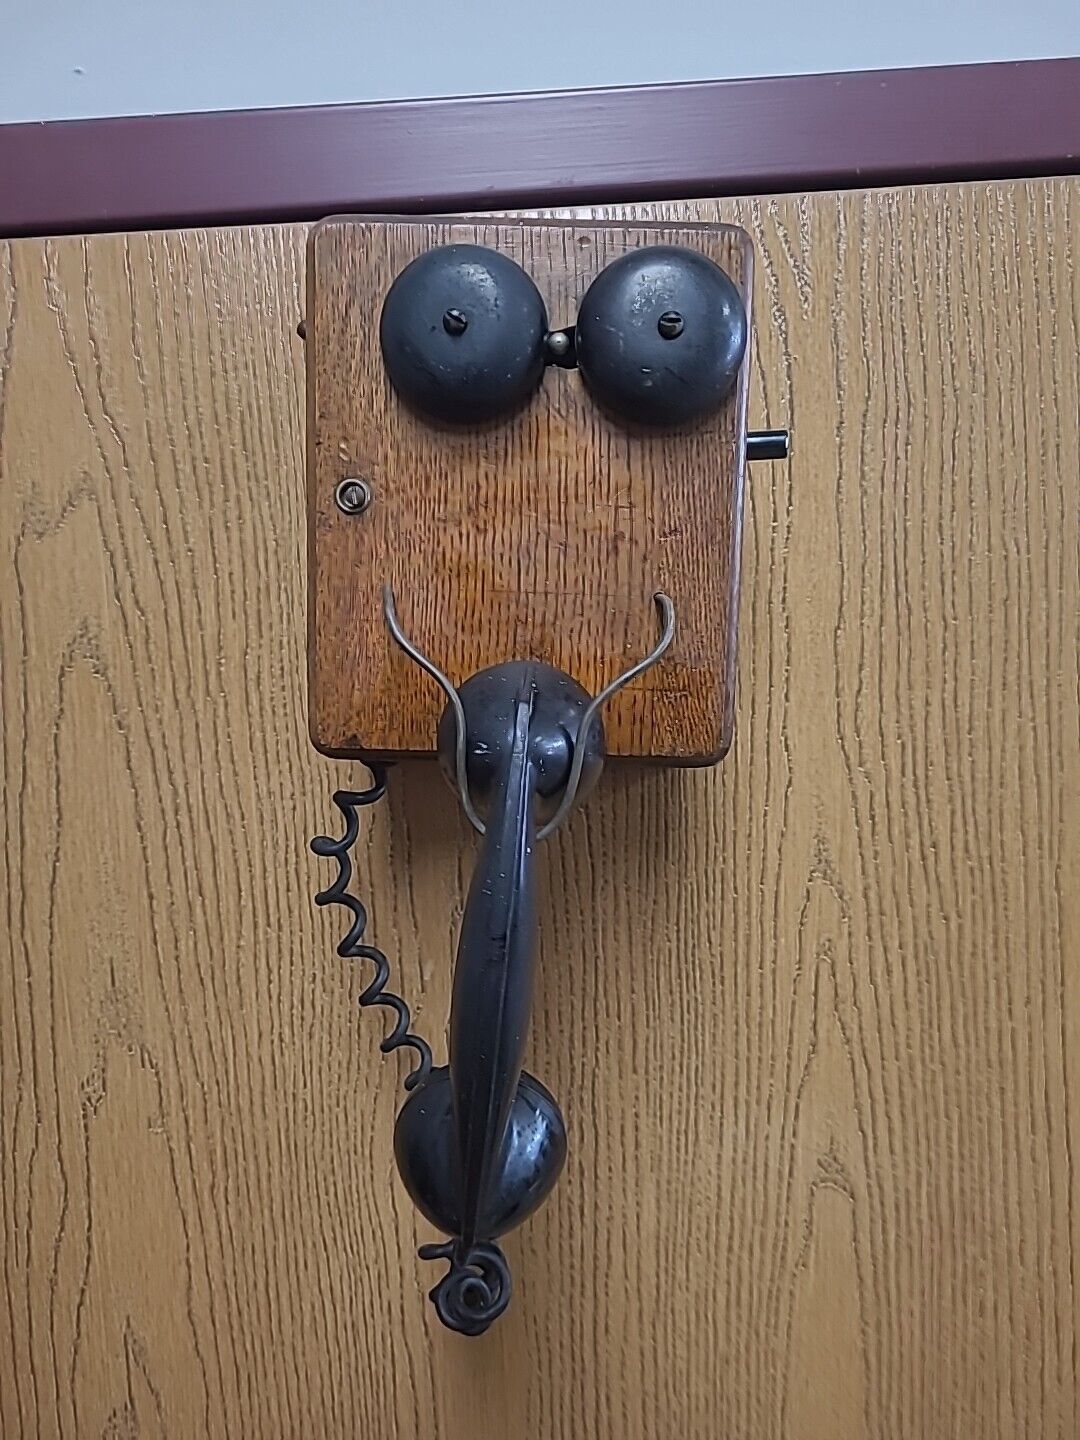 Antique Kellogg Wall Crank Telephone 1900s Vintage Wooden Collector phone oak